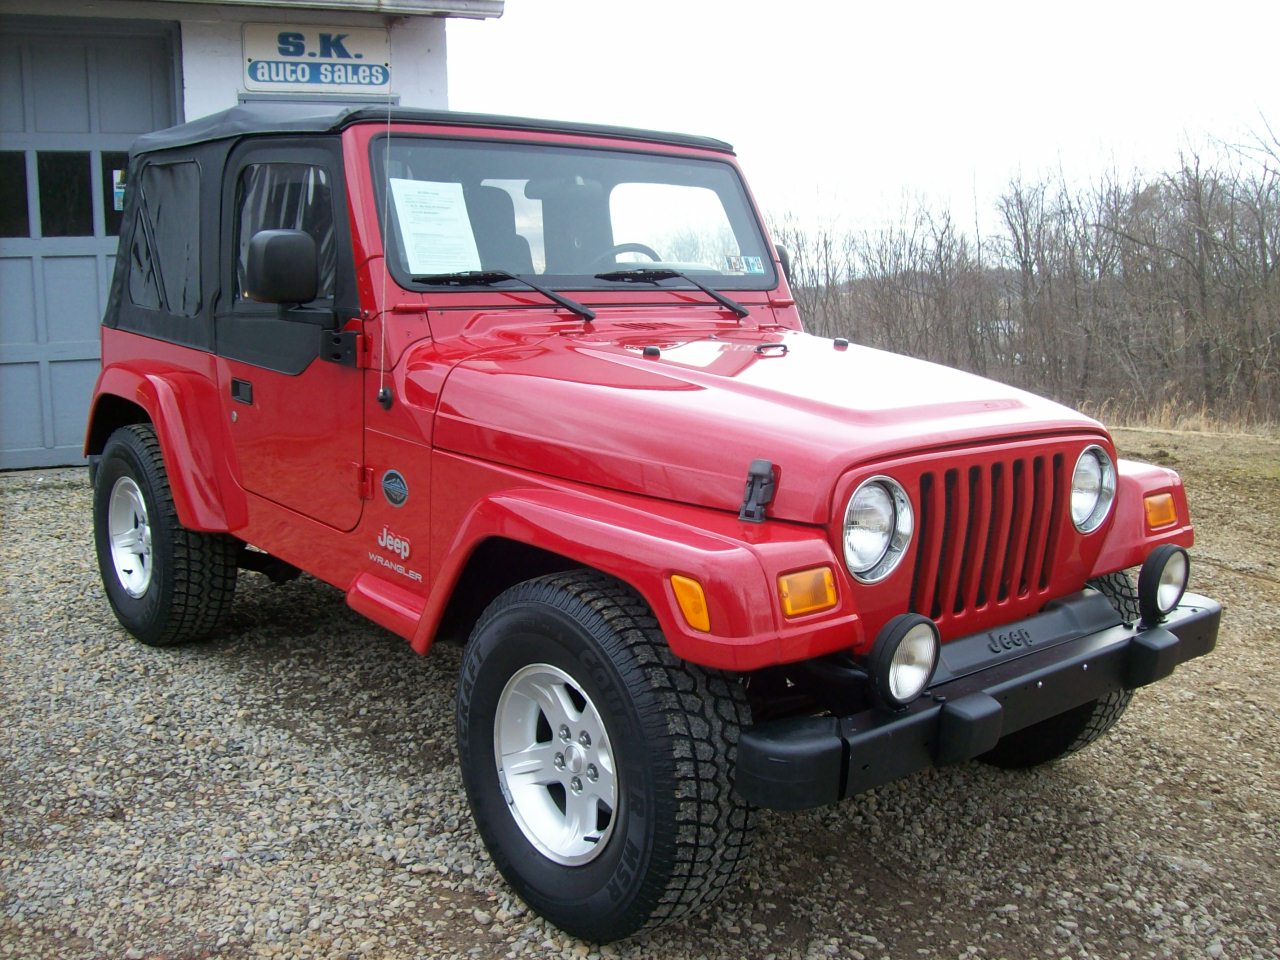 2005 Jeep Wrangler Rocky Mountain Edition 4×4 65K Miles | S&K Auto Sales